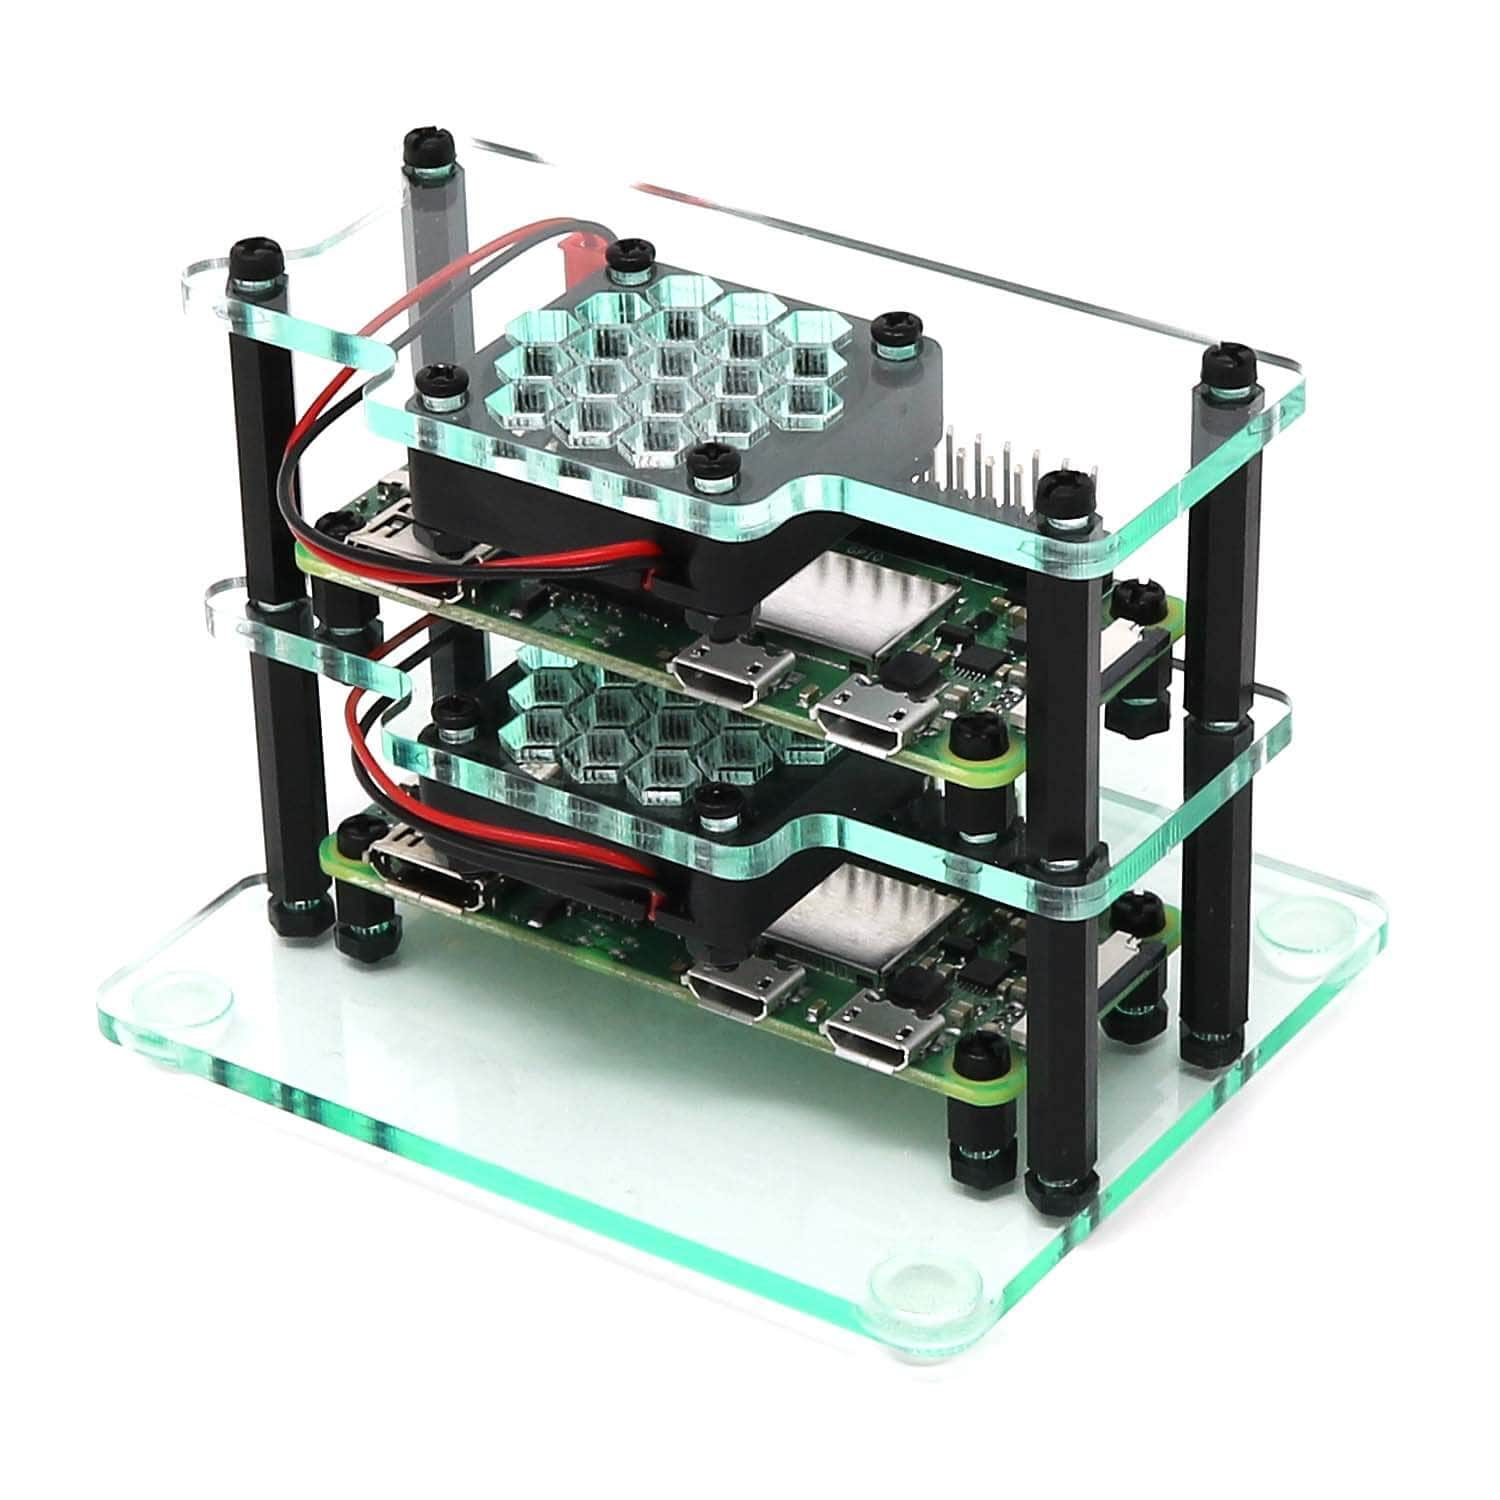 Mini Cluster Case for Raspberry Pi Zero 2 (with Fans) - The Pi Hut